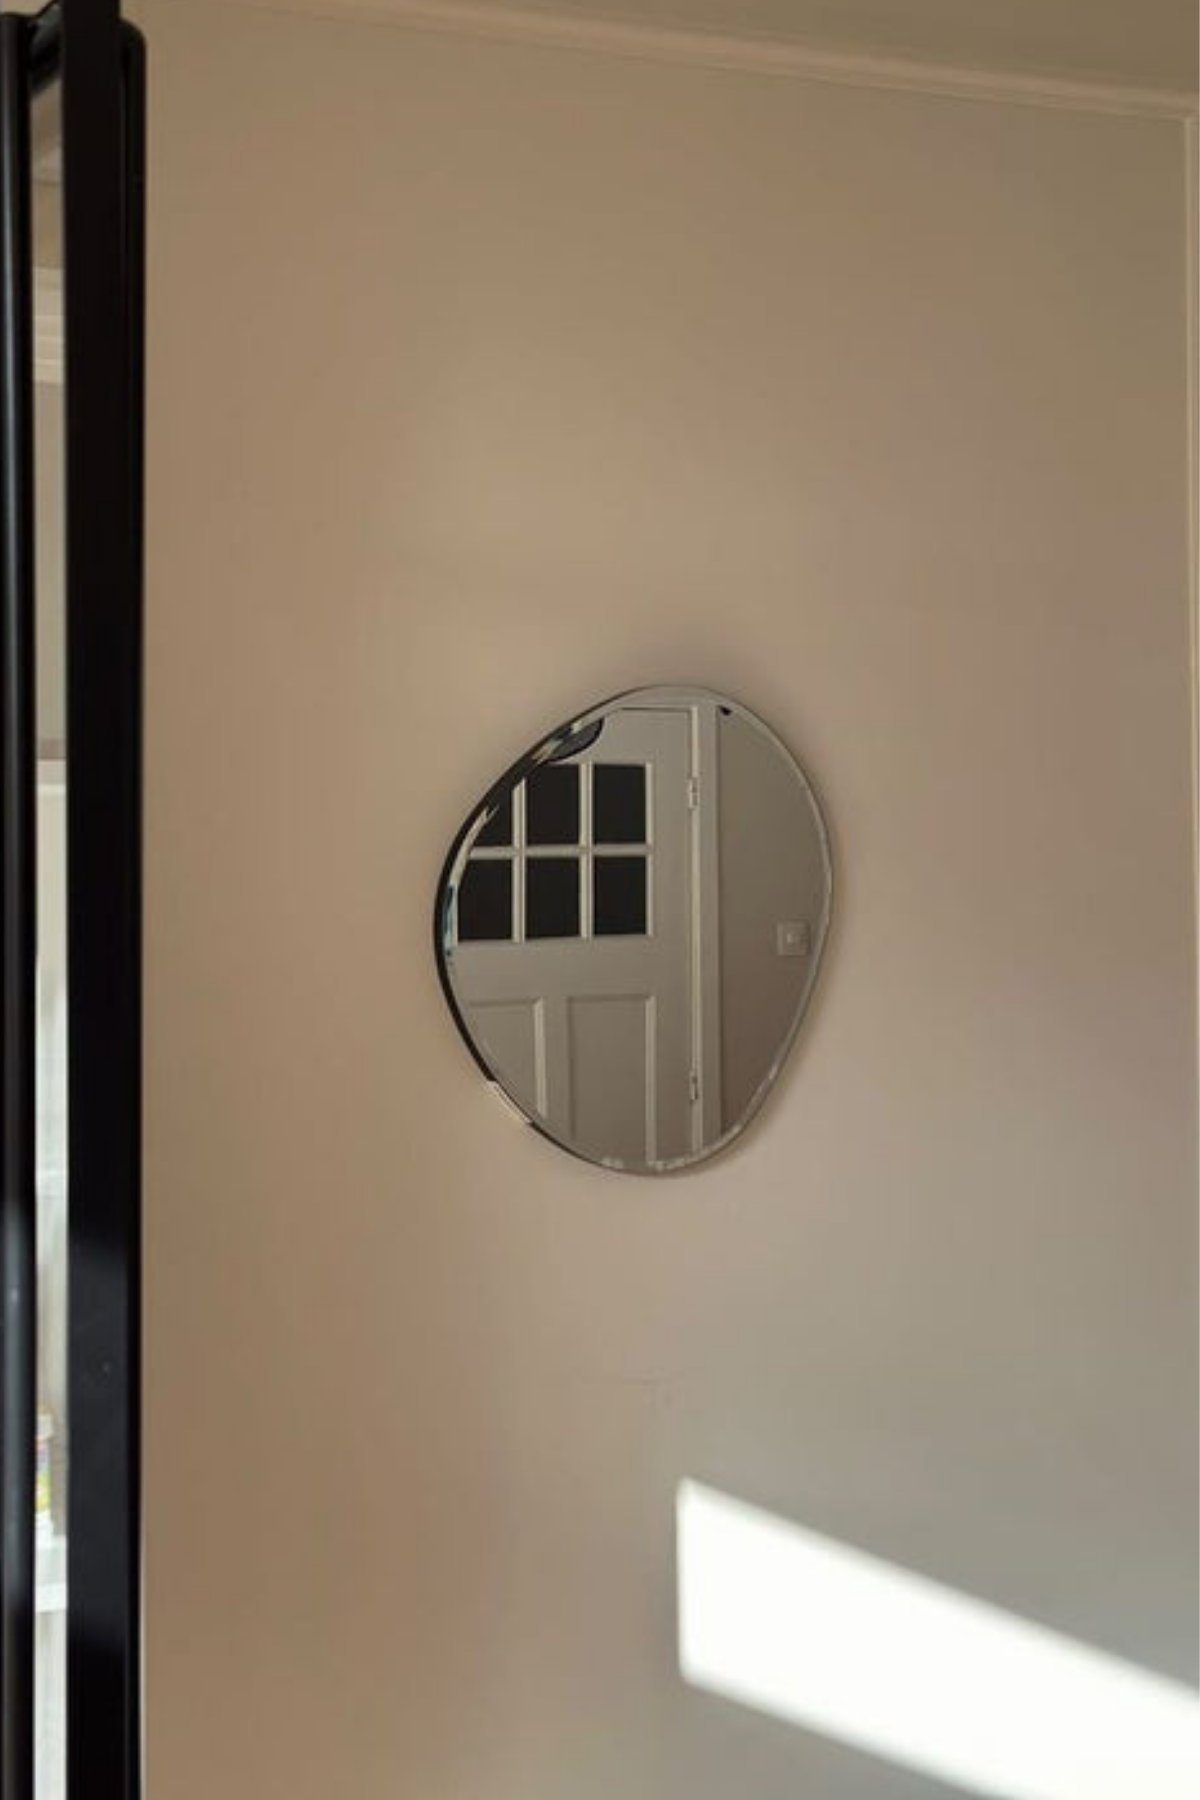 LEVOO Wandspiegel x (45 LEVOO 50 Wandspiegel Loredana asymmetrischer Spiegel schwarz, x Designerspiegel 2,2 cm)